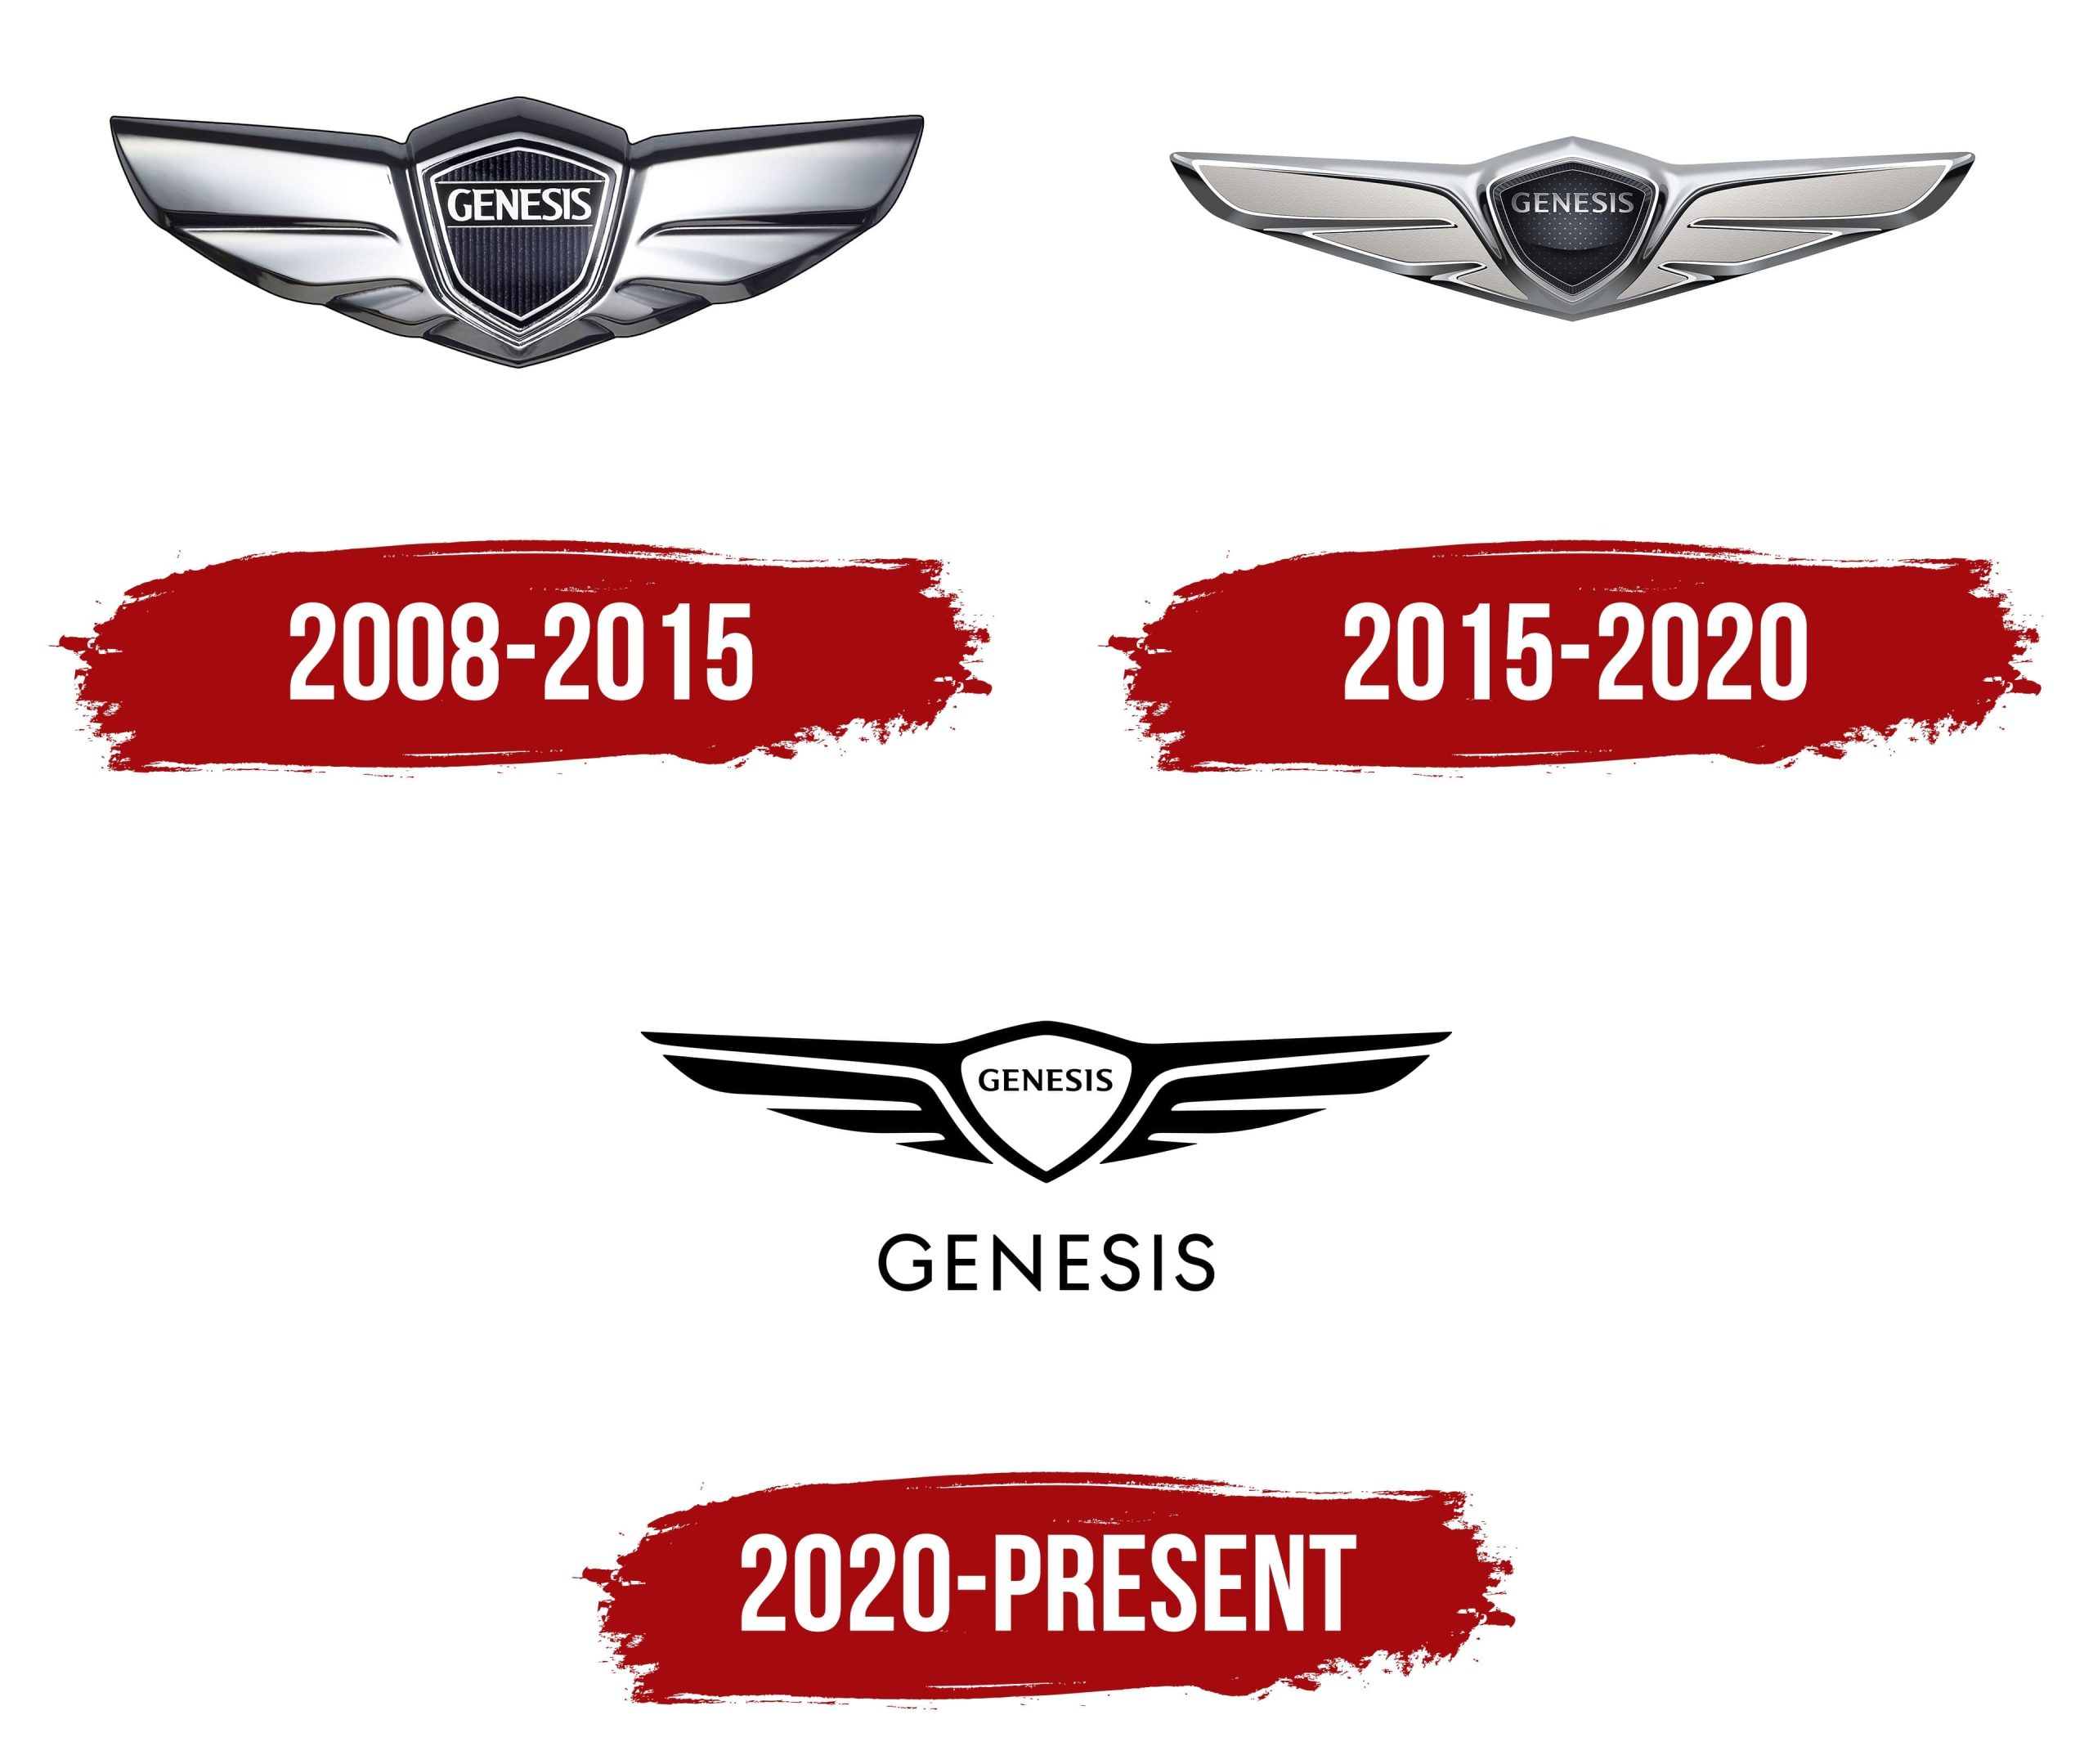 History of Genesis cars